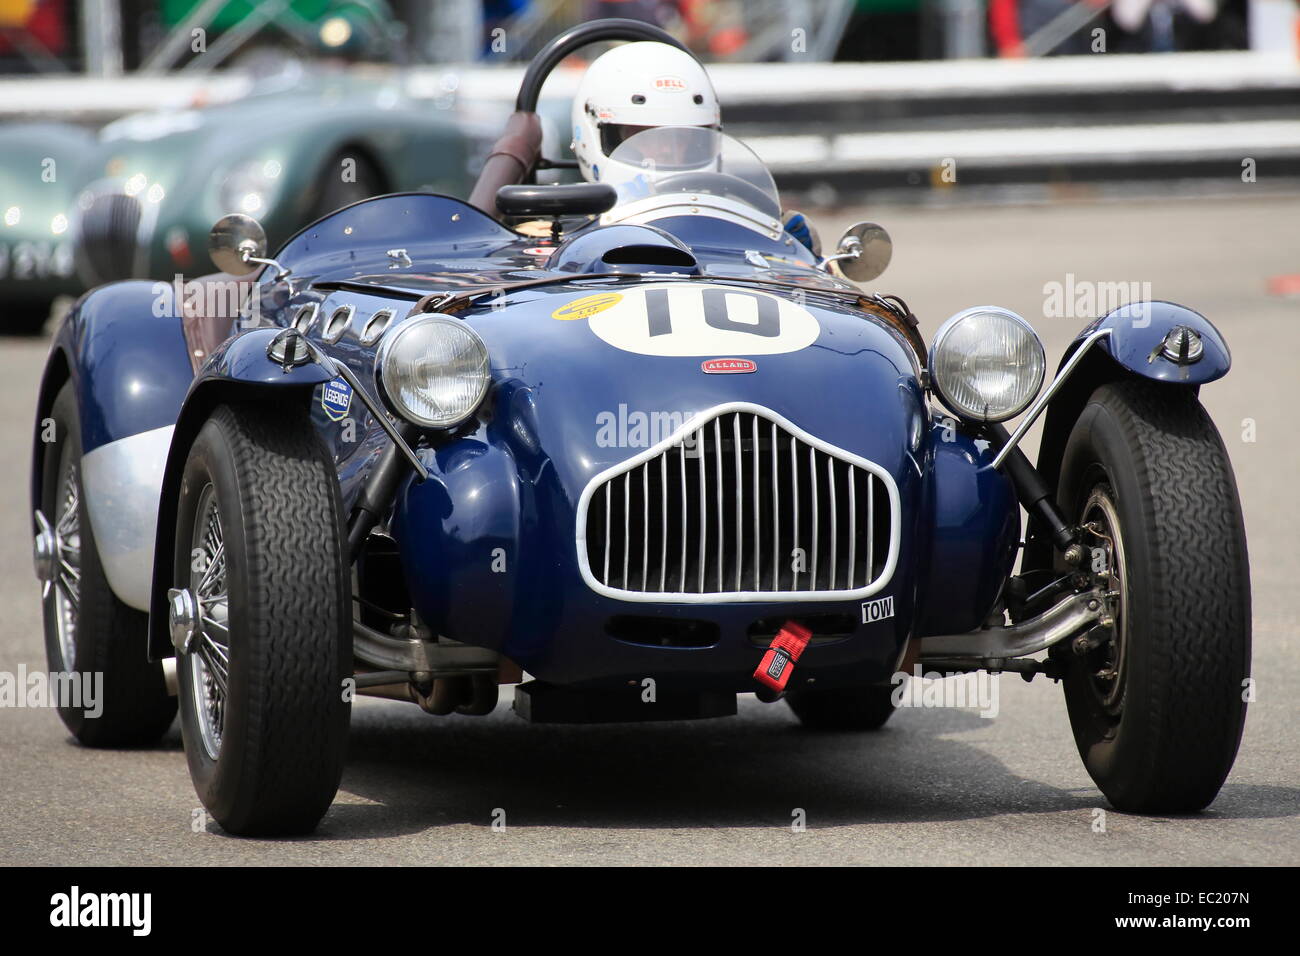 Allard J2, built in 1950, driver Till Bechtolsheimer, Series C sports car, 9th Grand Prix Historique Monaco 2014 Monaco Stock Photo